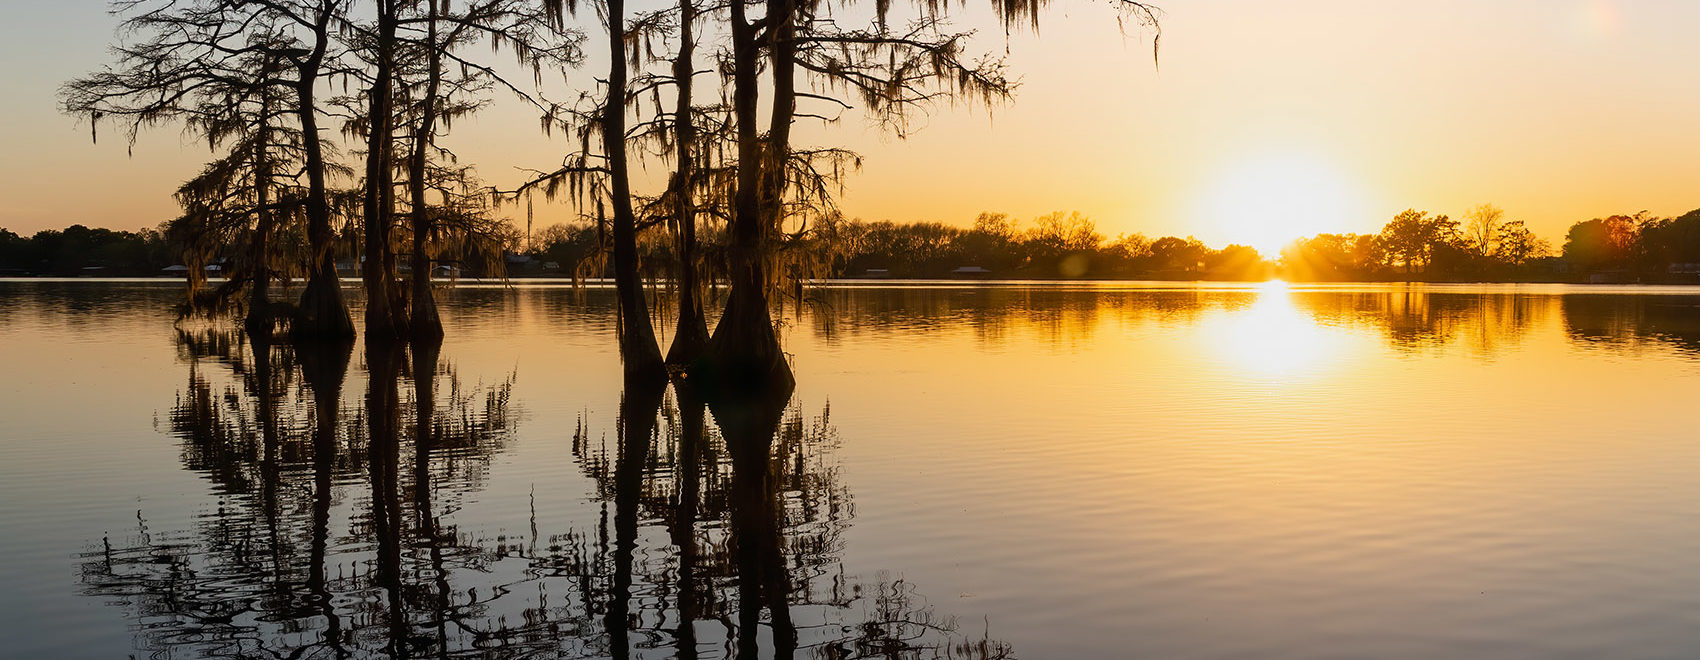 sunset over lake with cypress trees at Lake Bruin Louisiana